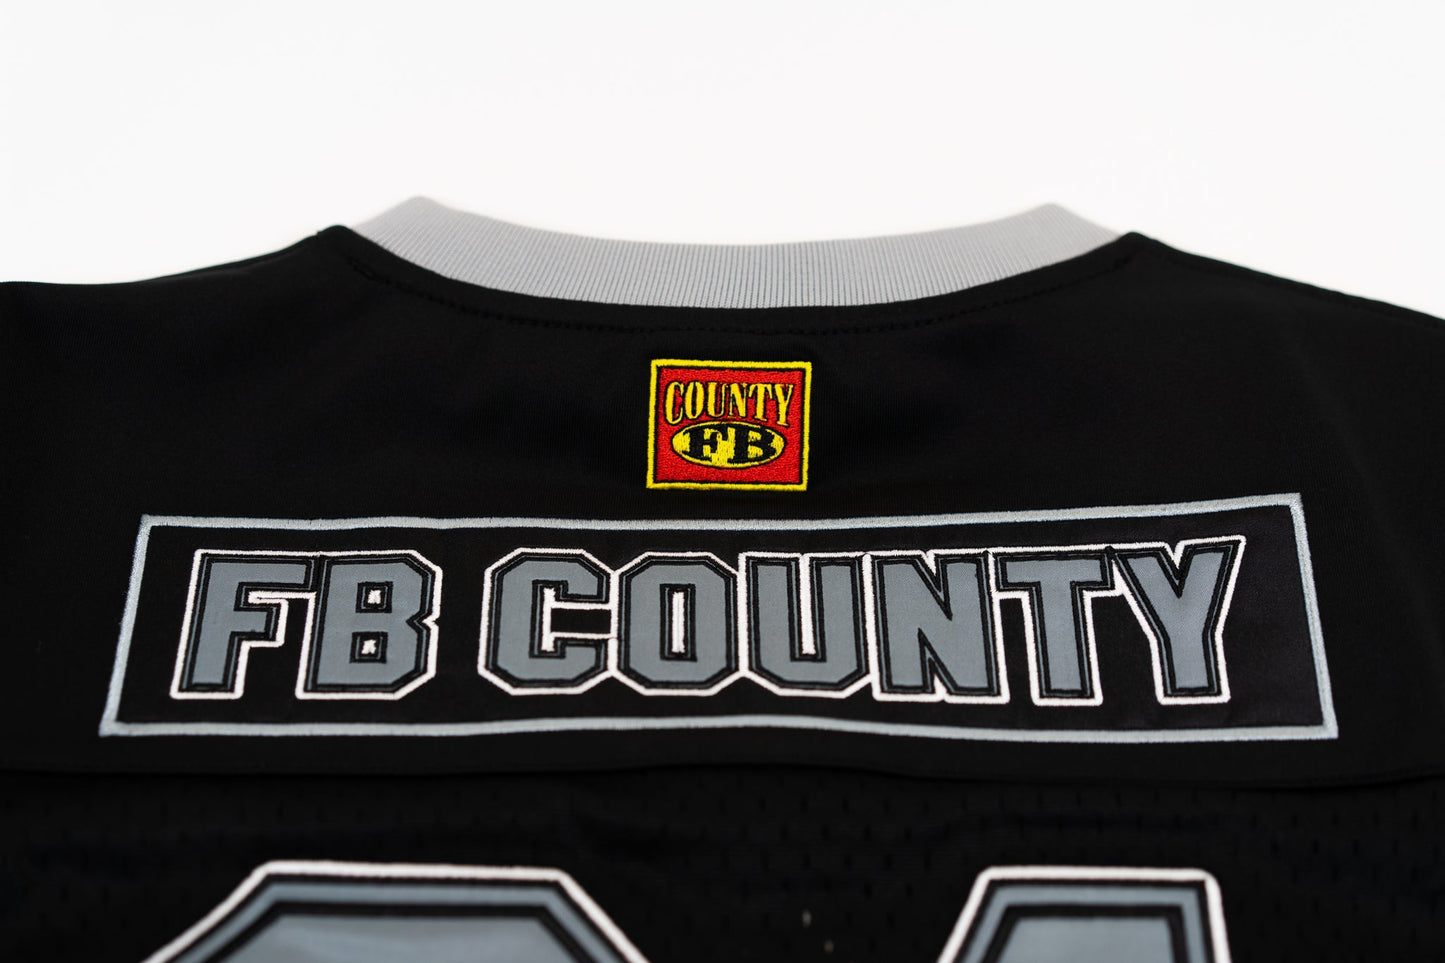 FB County Womens Football Classic Signature Jersey